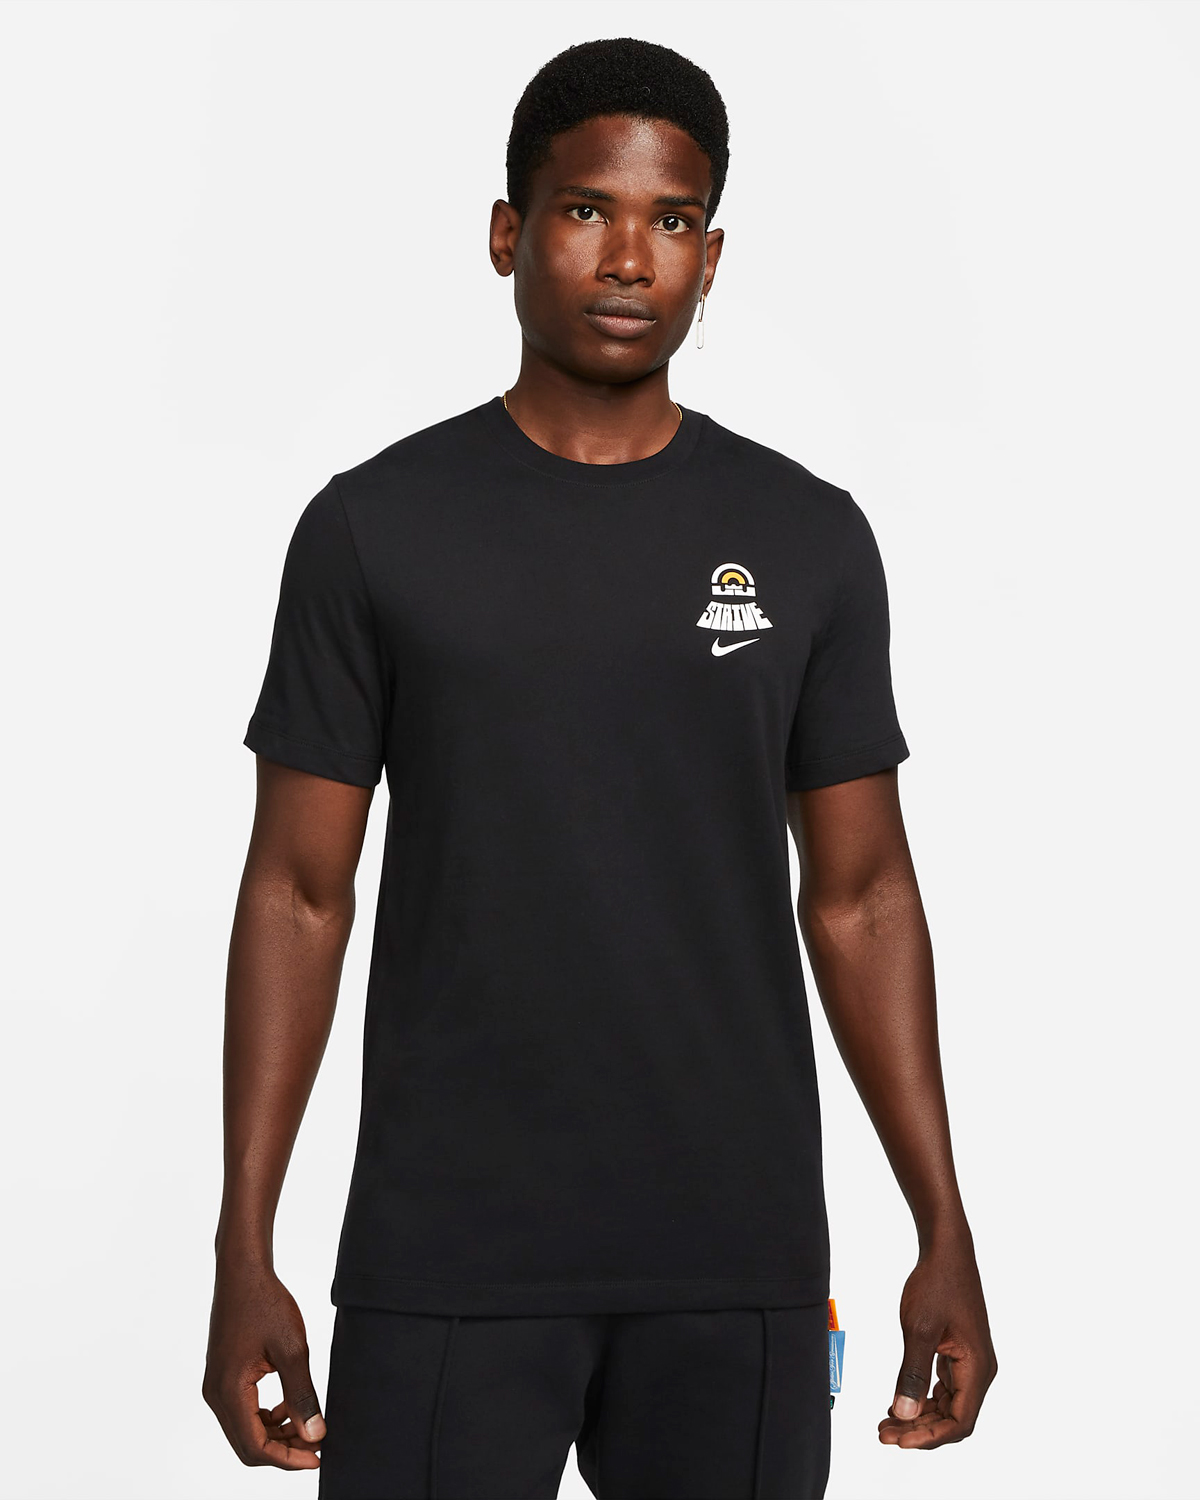 Nike-LeBron-20-Trinity-T-Shirt-1